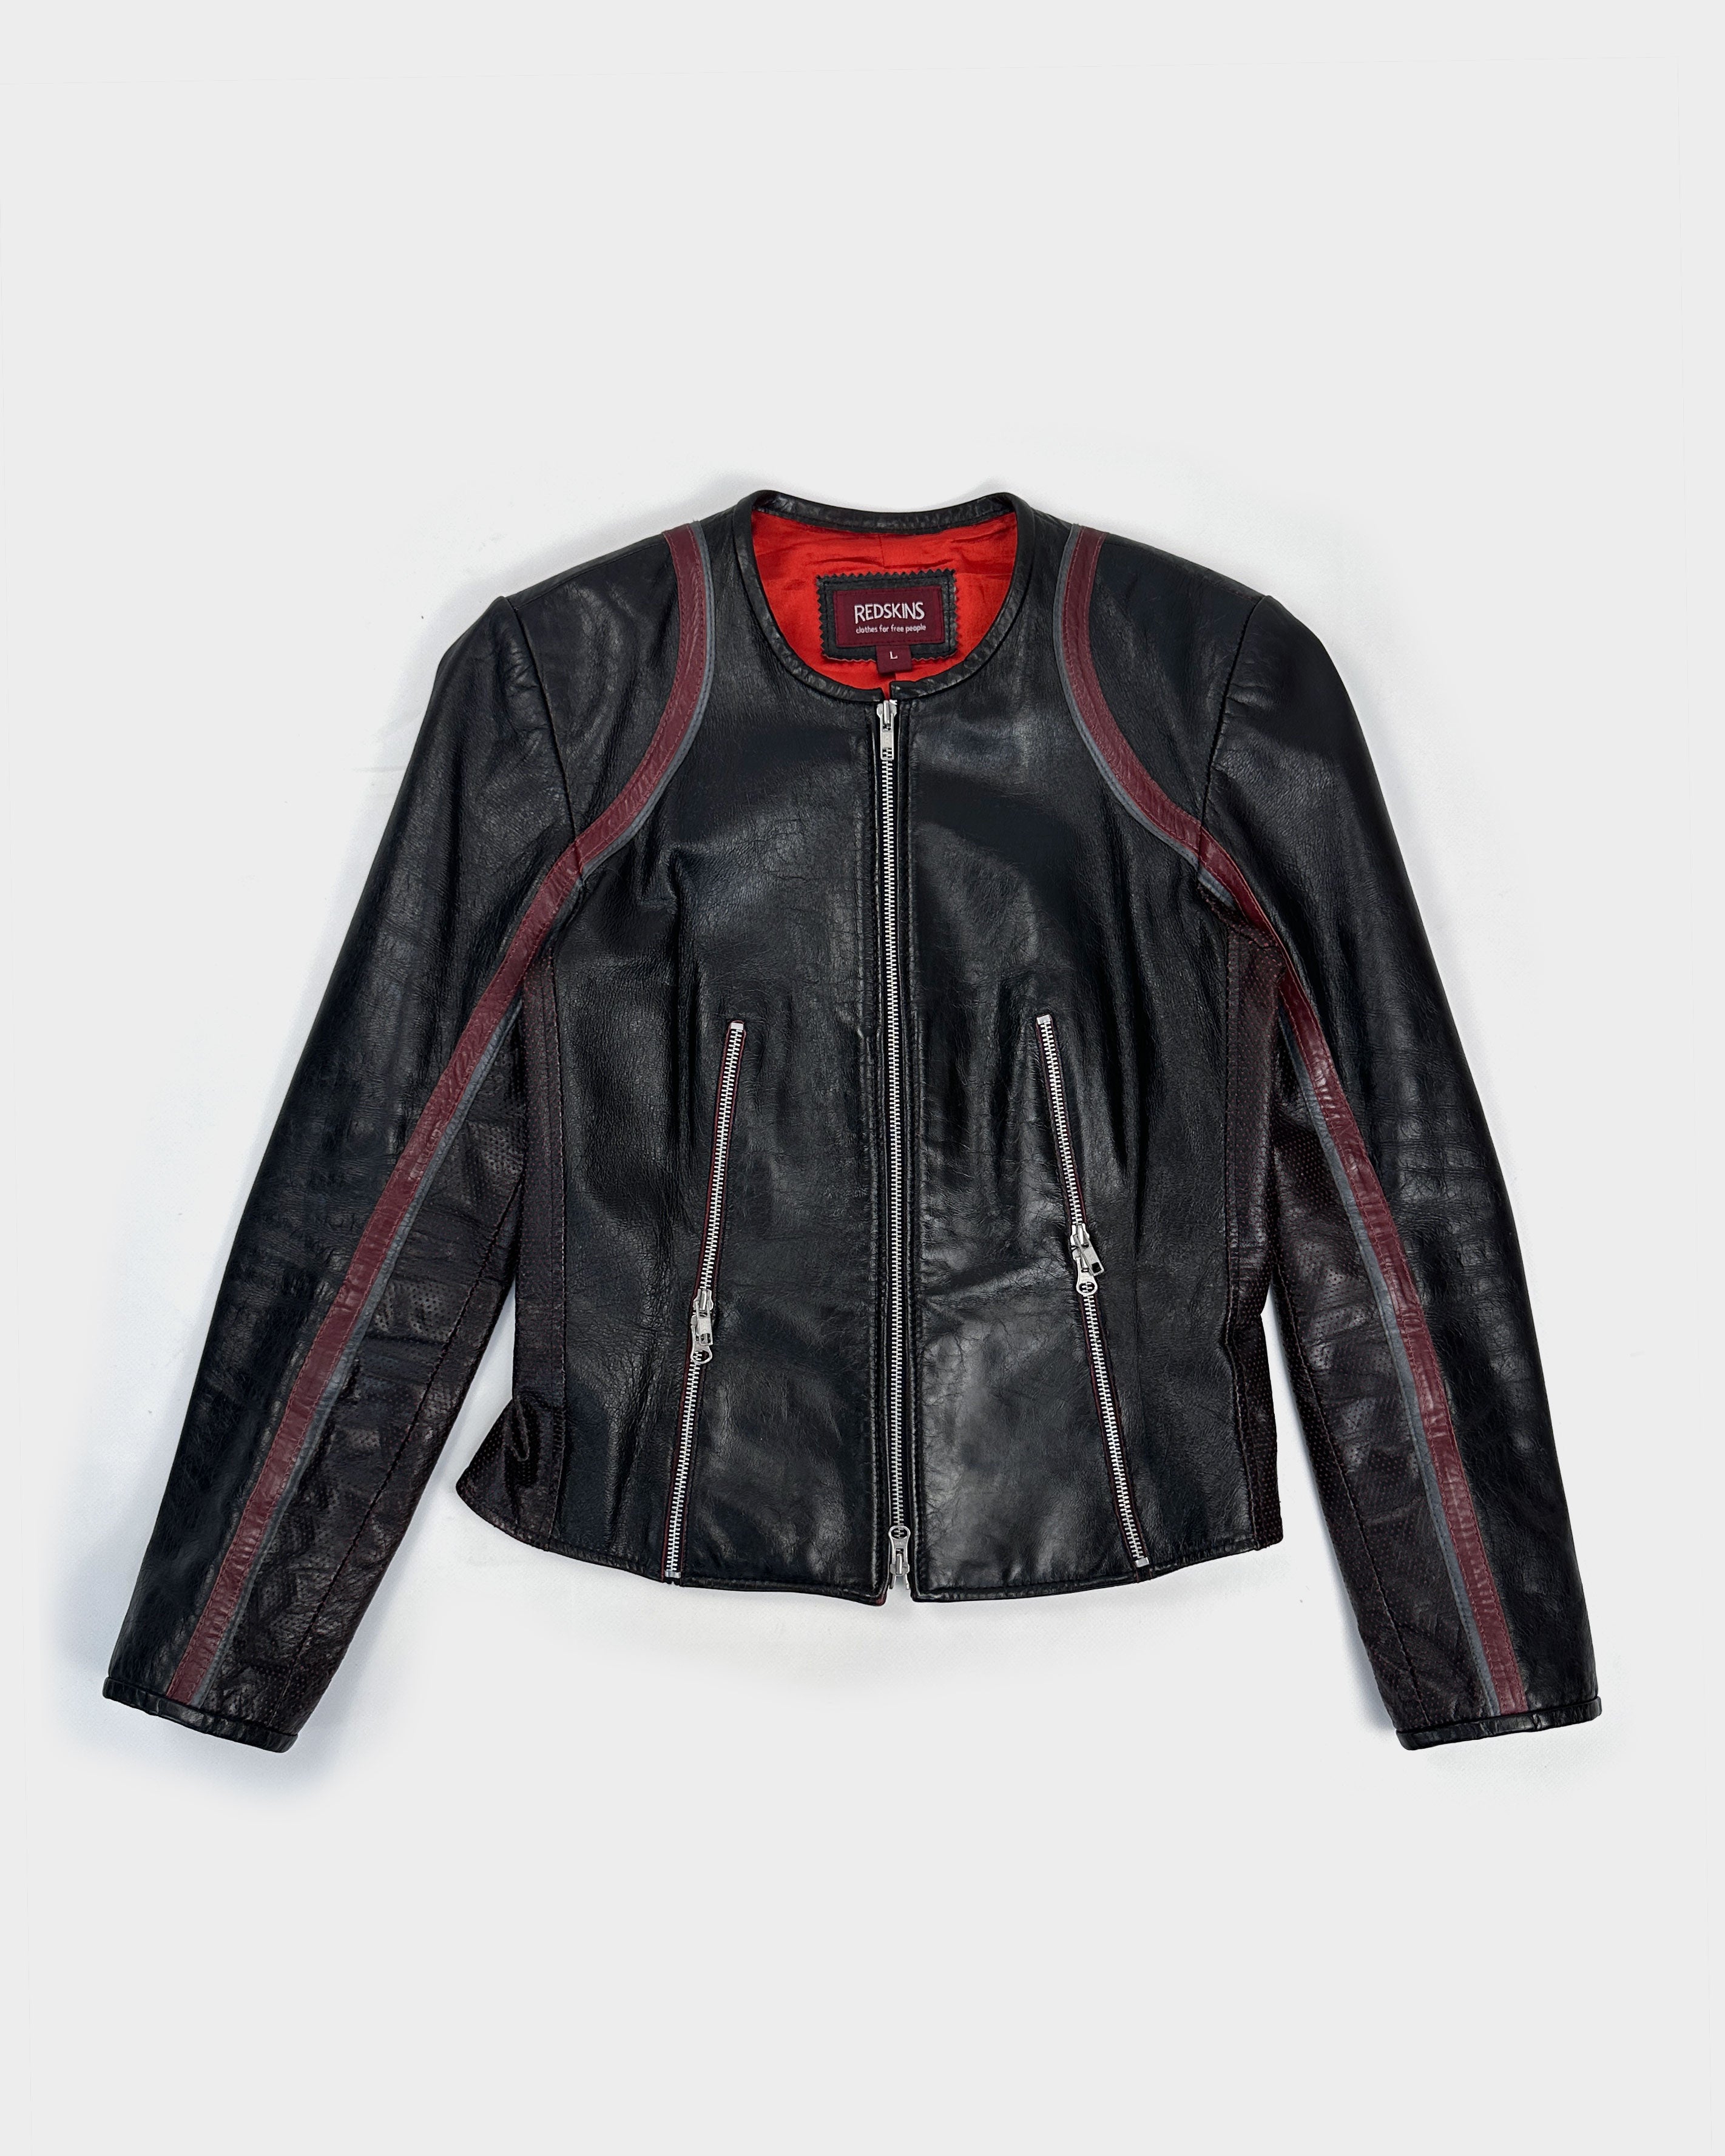 1 x vintage Redskins leather jacket size XL